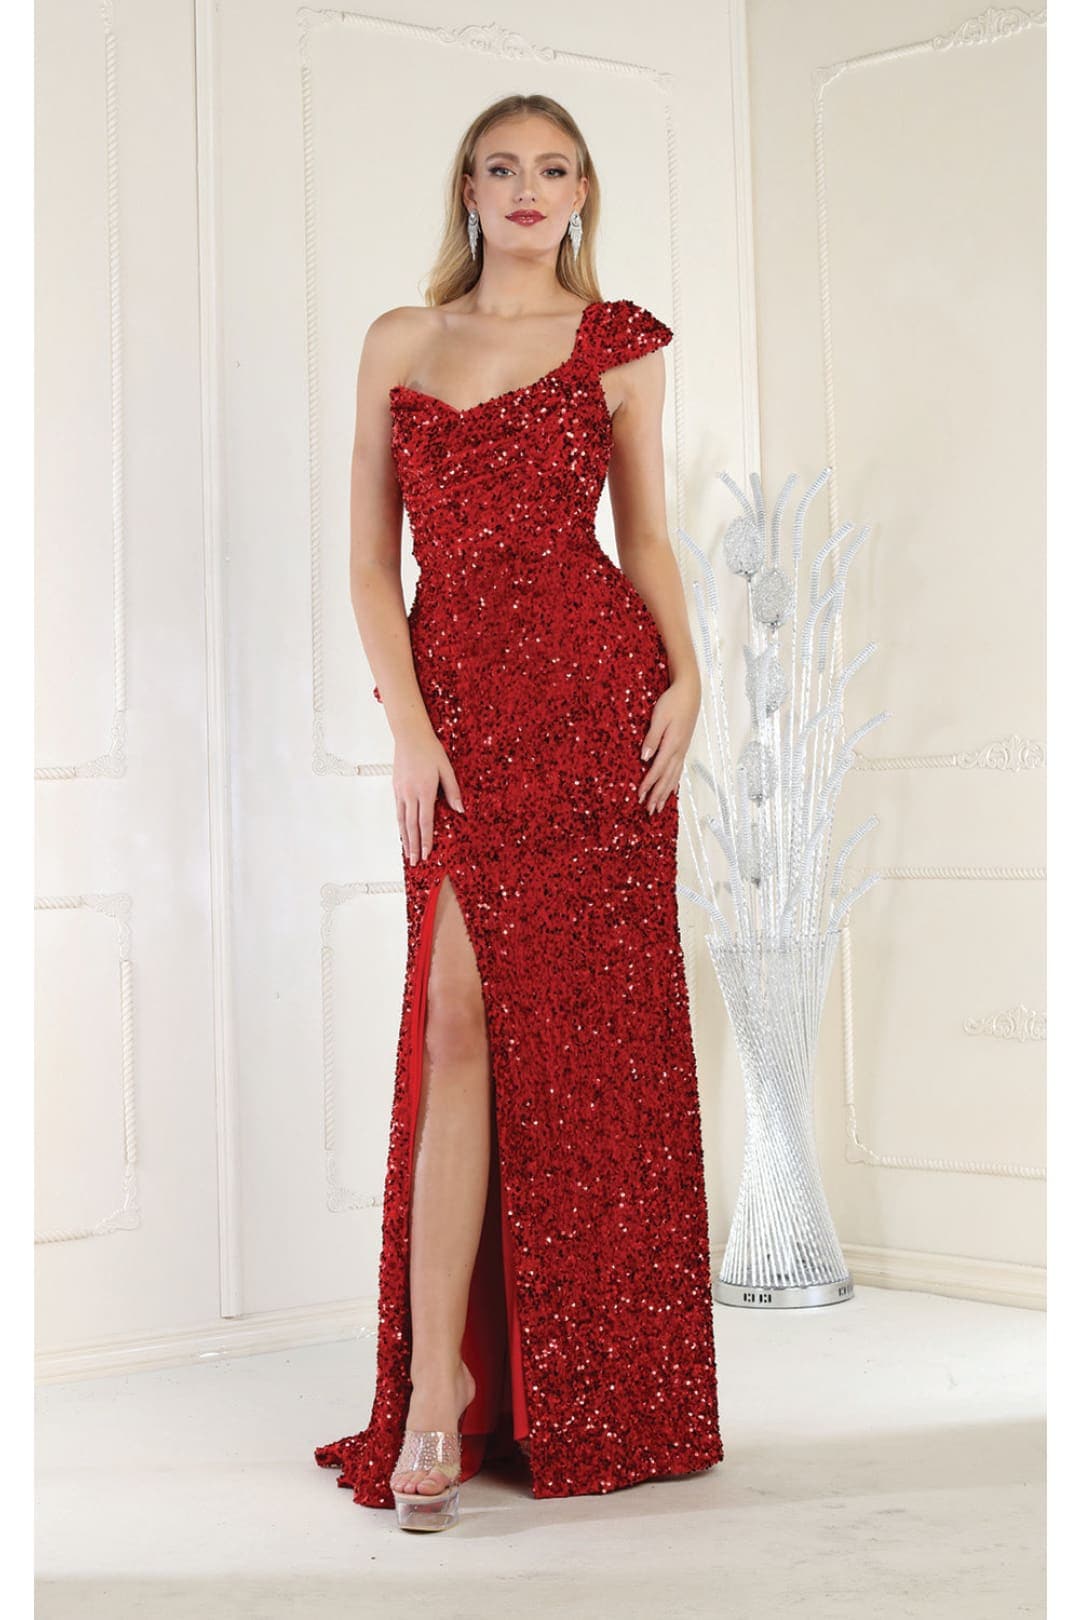 Royal Queen RQ8003 Thigh High Slit Formal Dress - RED / 4 - Dress